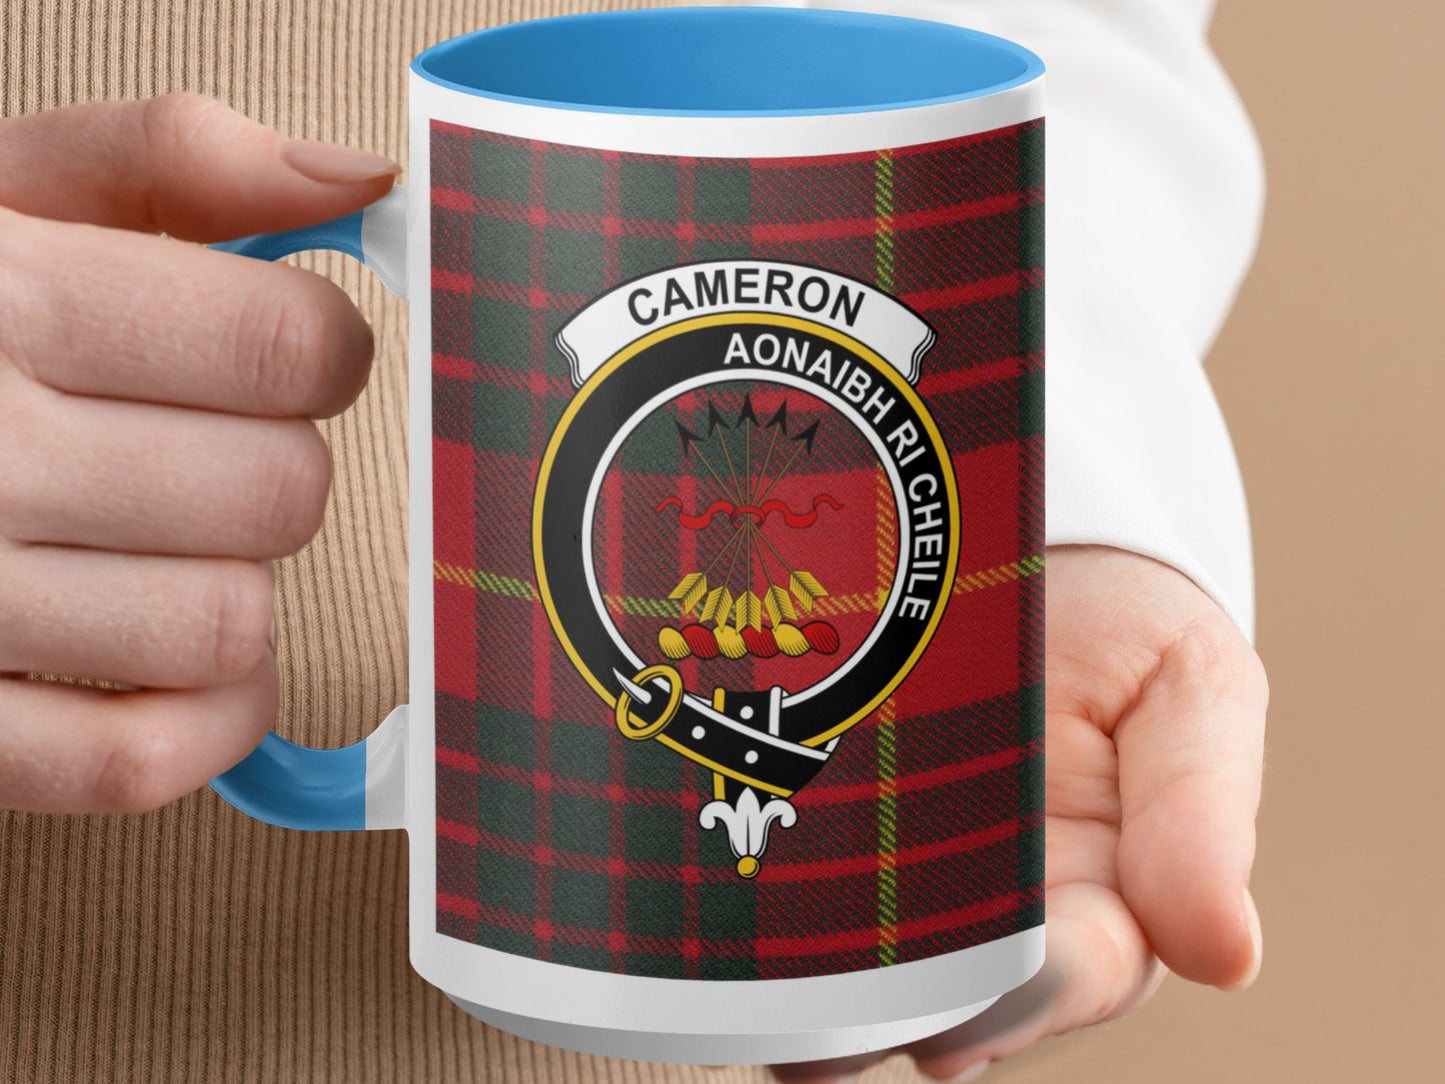 Clan Cameron Scottish Tartan Crest with Motto Mug - Living Stone Gifts